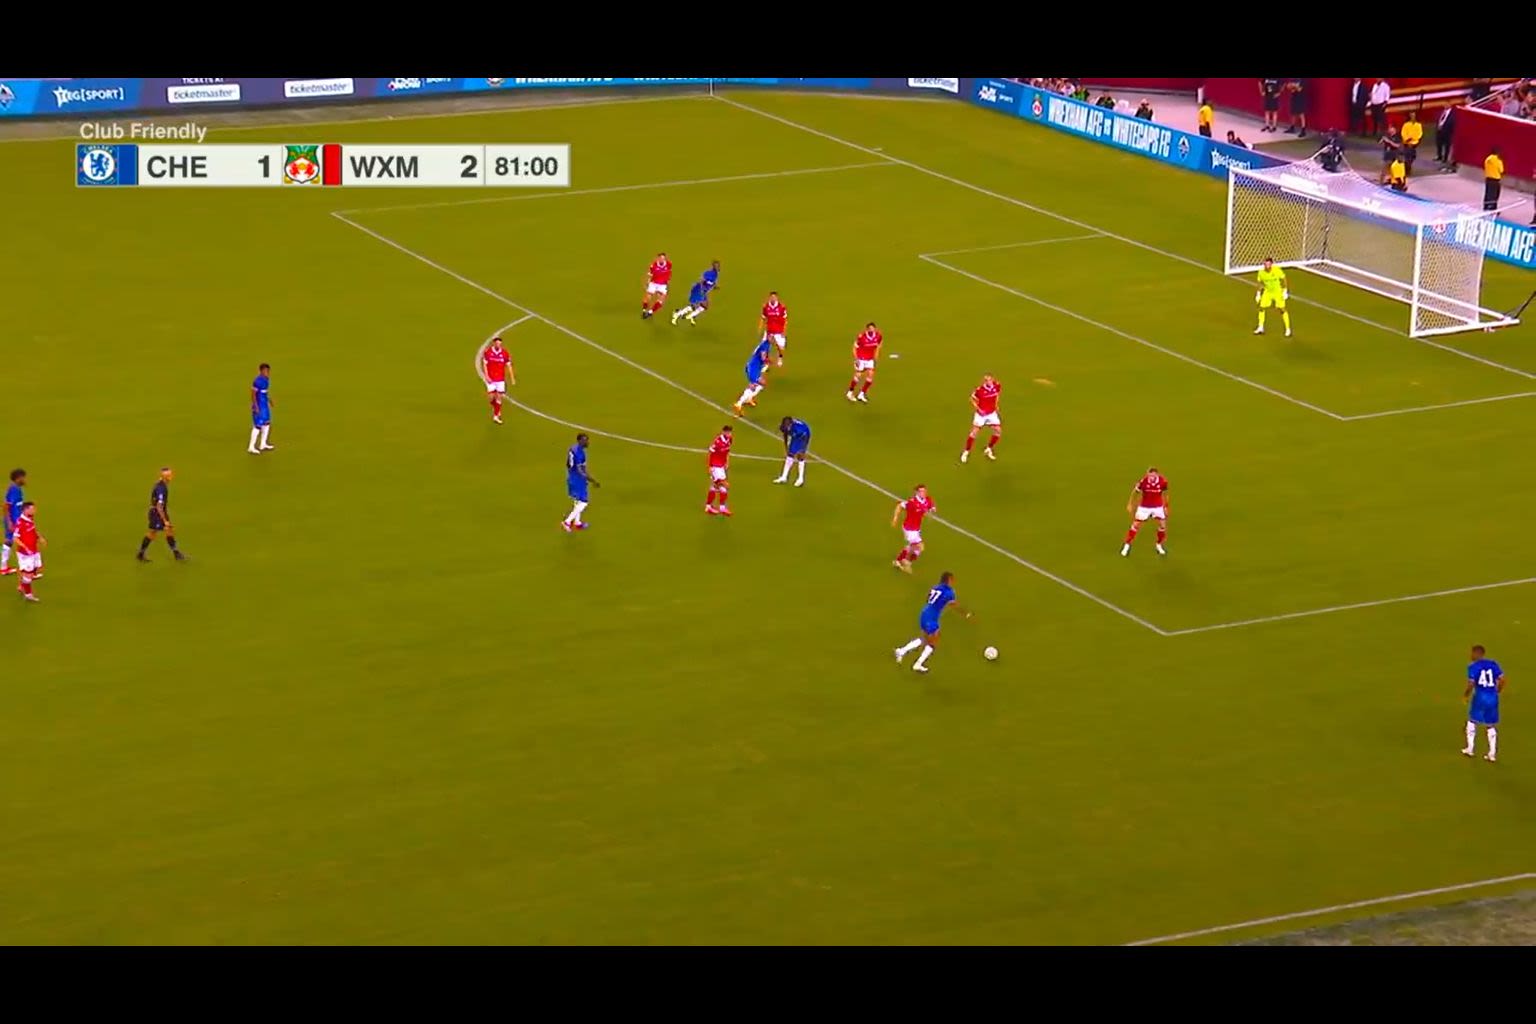 (Video): Unlikely goalscorer as Chelsea scrape a draw against Wrexham in friendly